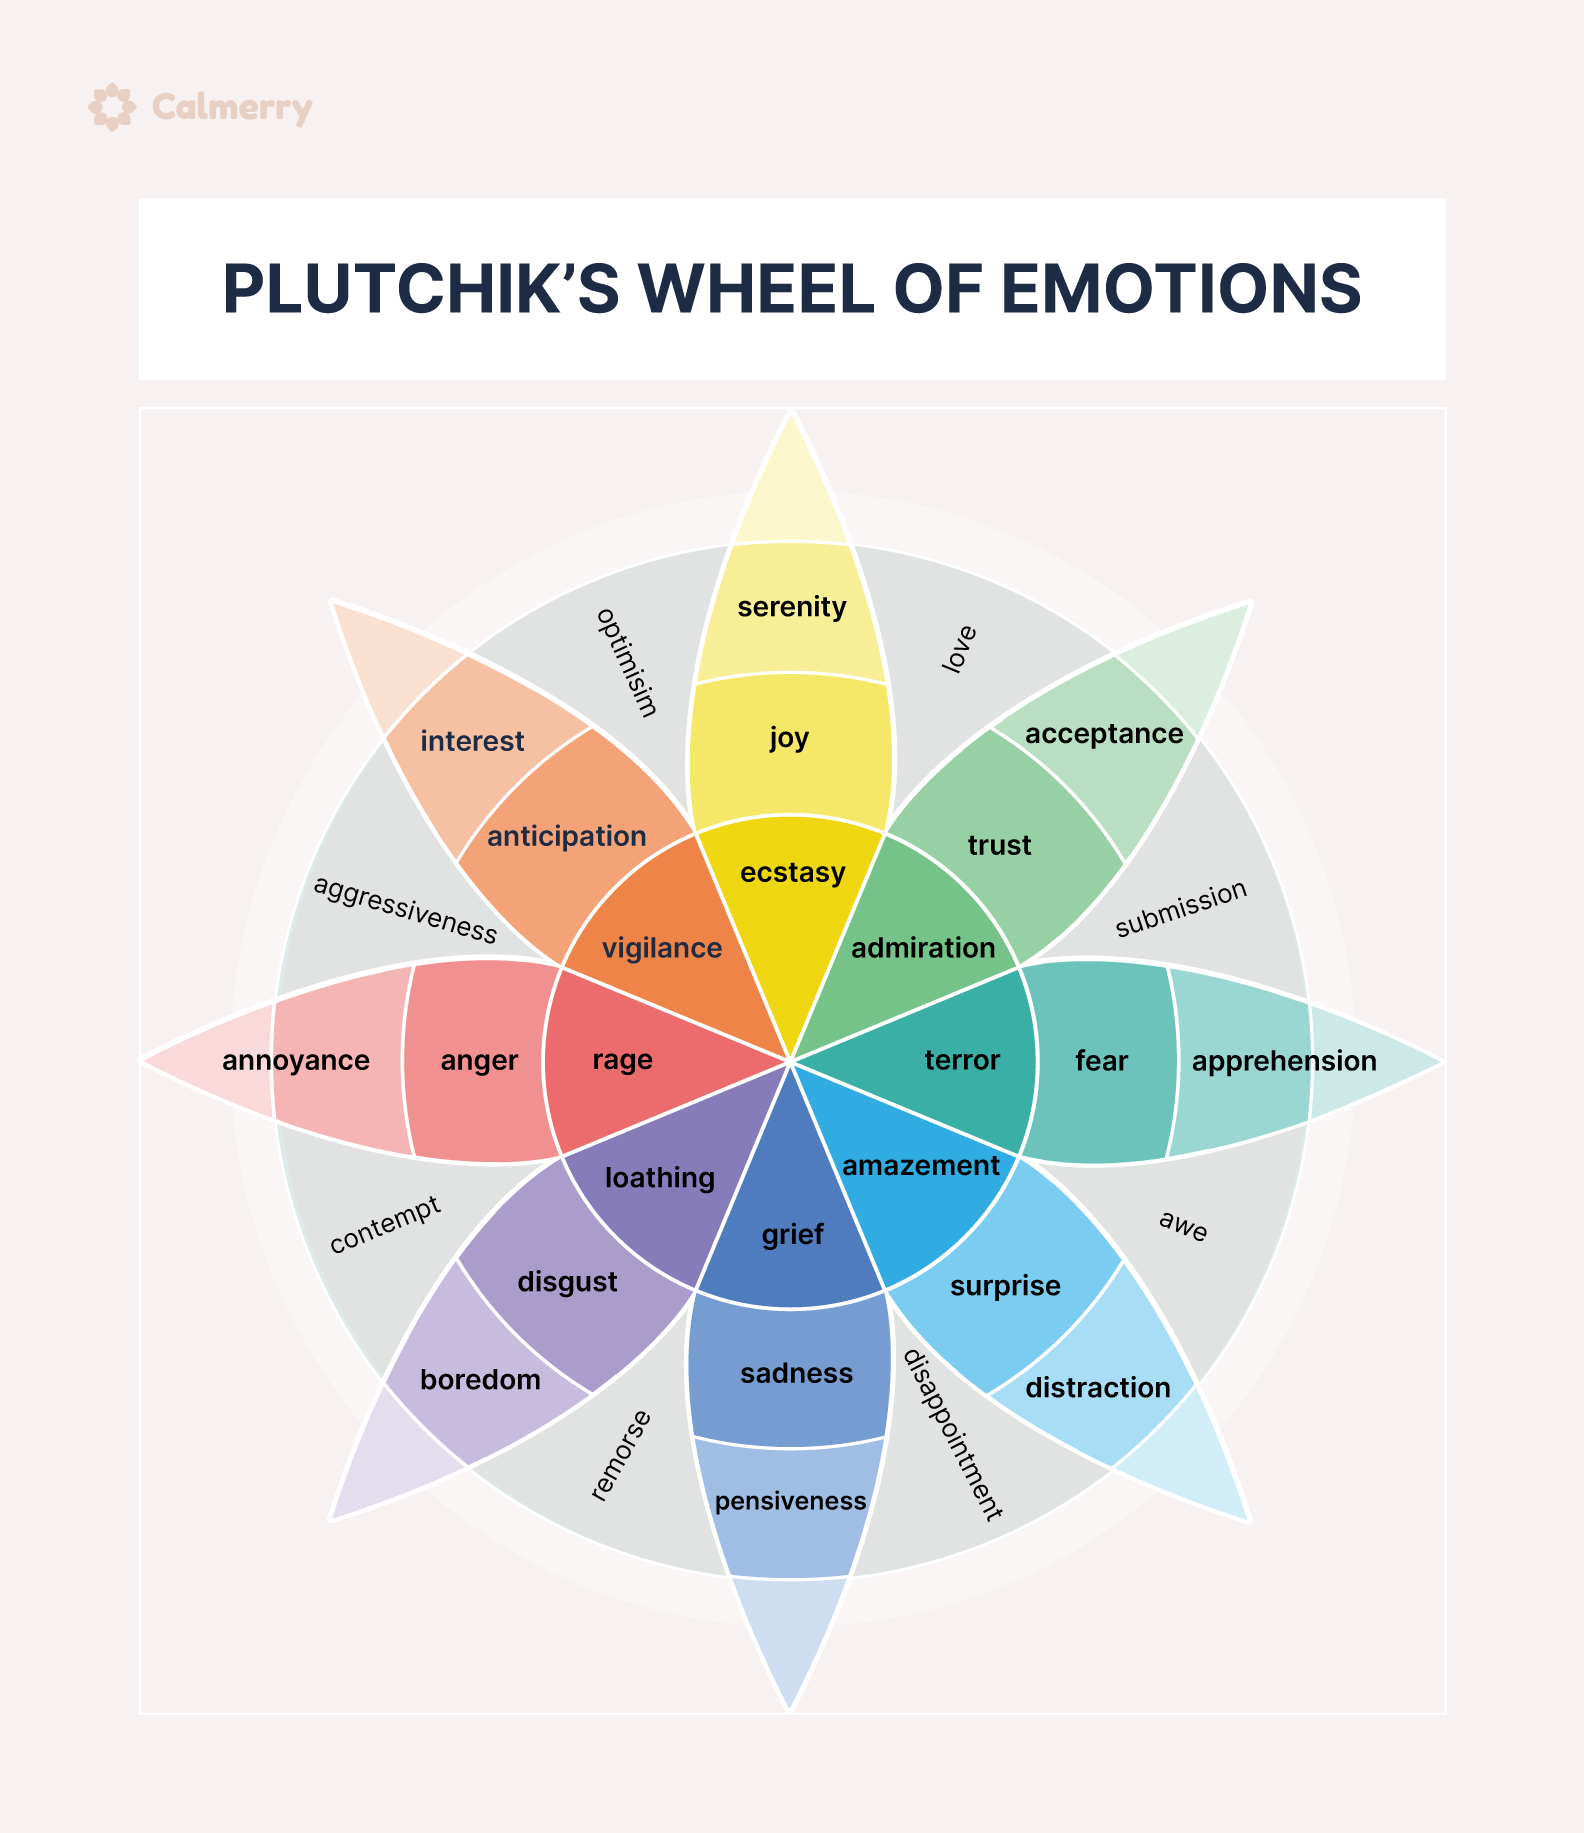 Plutchik’s wheel of emotions